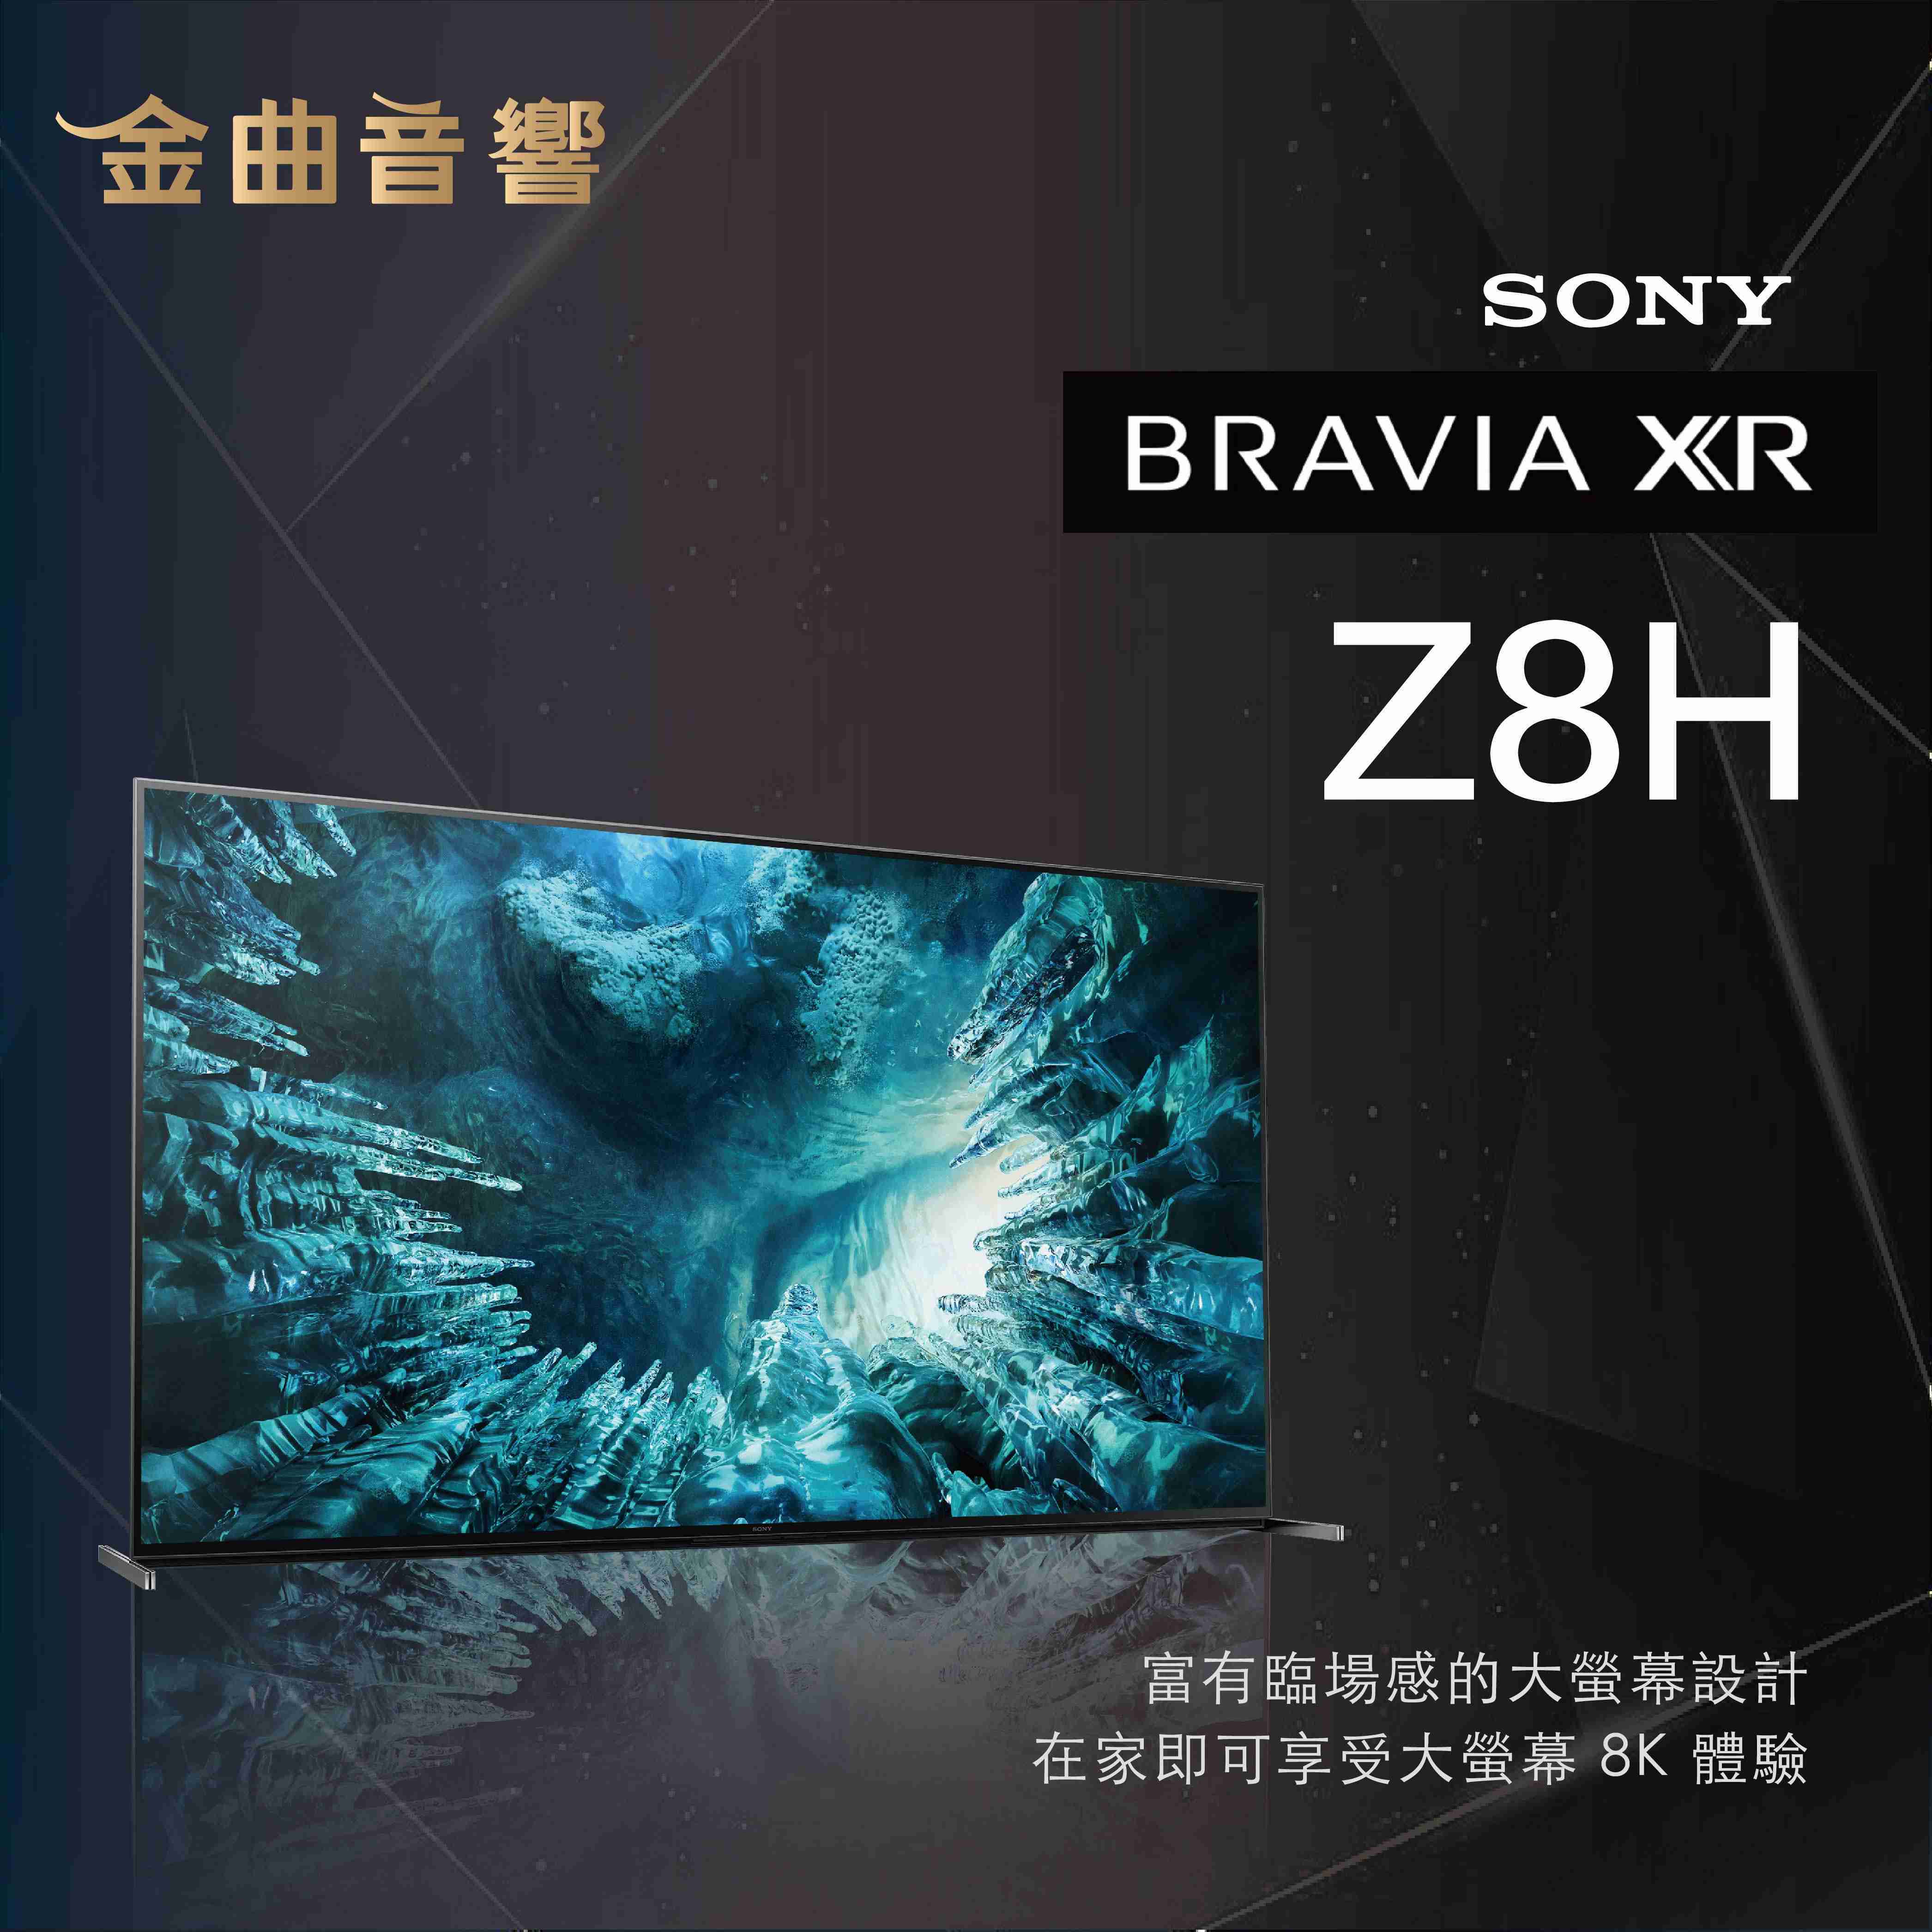 SONY 索尼 KD-85Z8H 8K HDR 85吋 全陣列 液晶 電視 2020 | 金曲音響